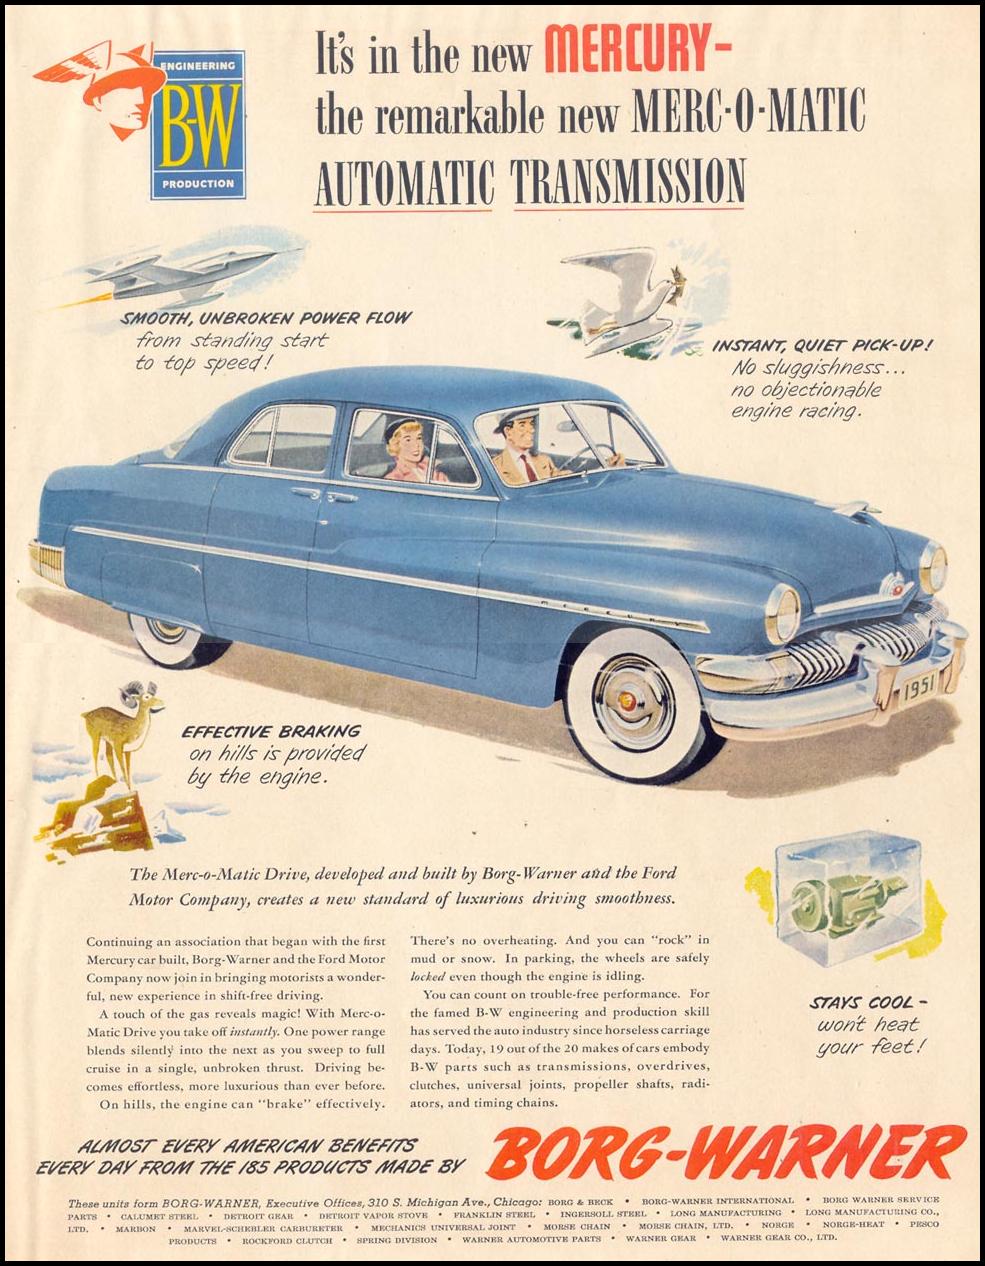 MERC-O-MATIC AUTOMATIC TRANSMISSION
LIFE
12/25/1950